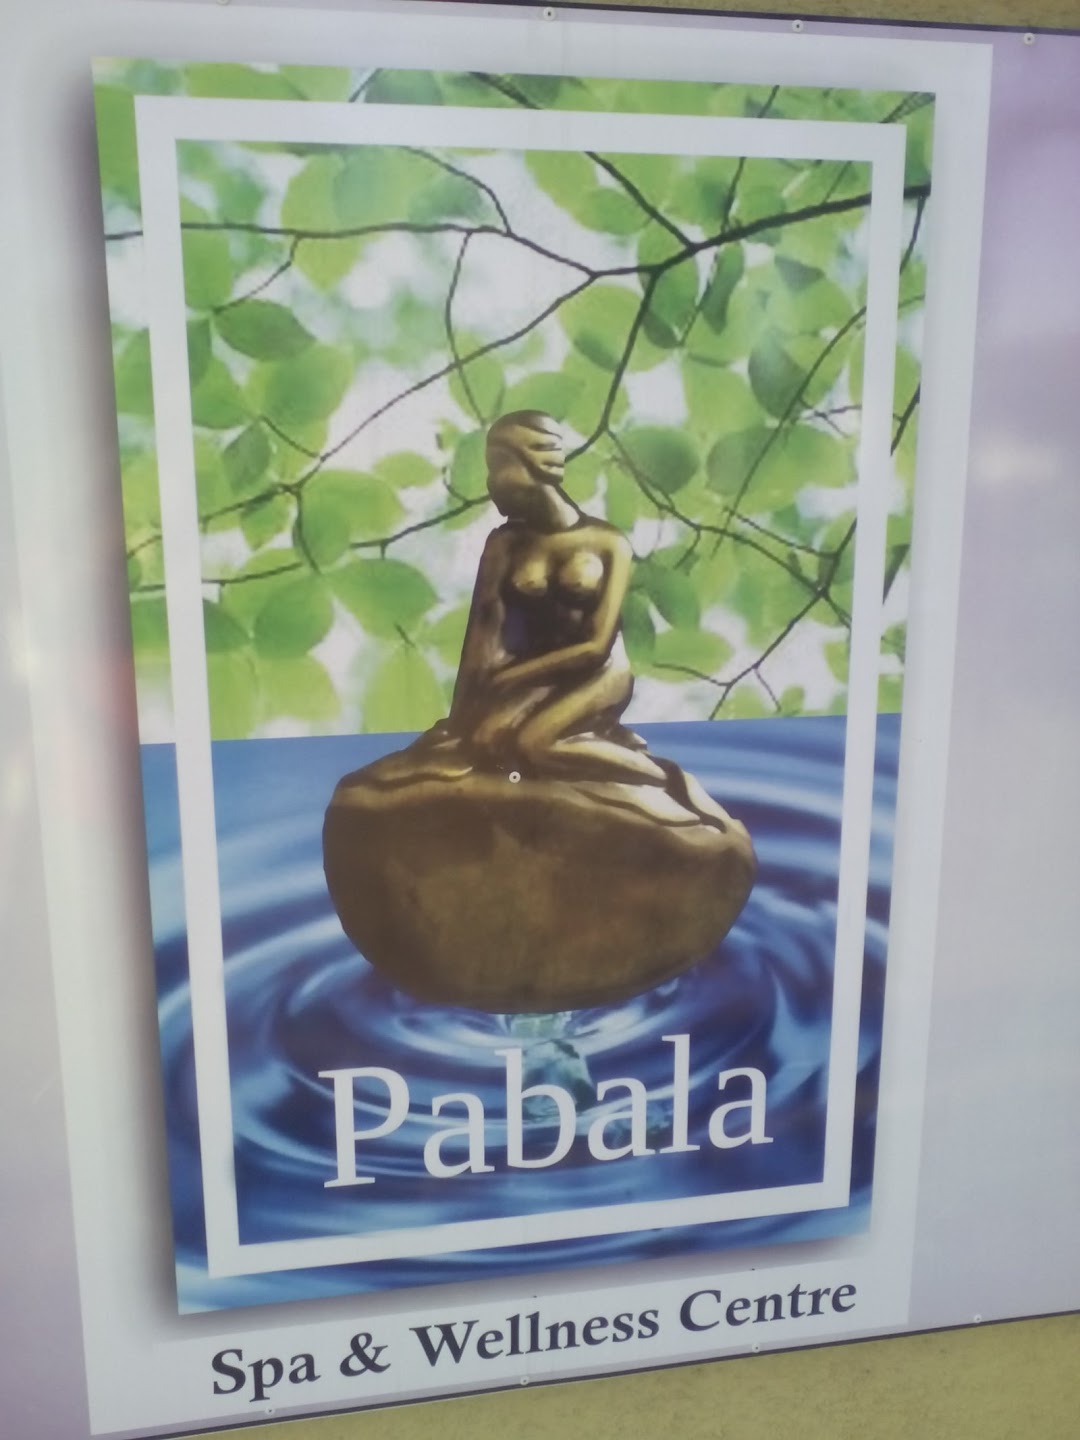 Pabala Wellness Spa